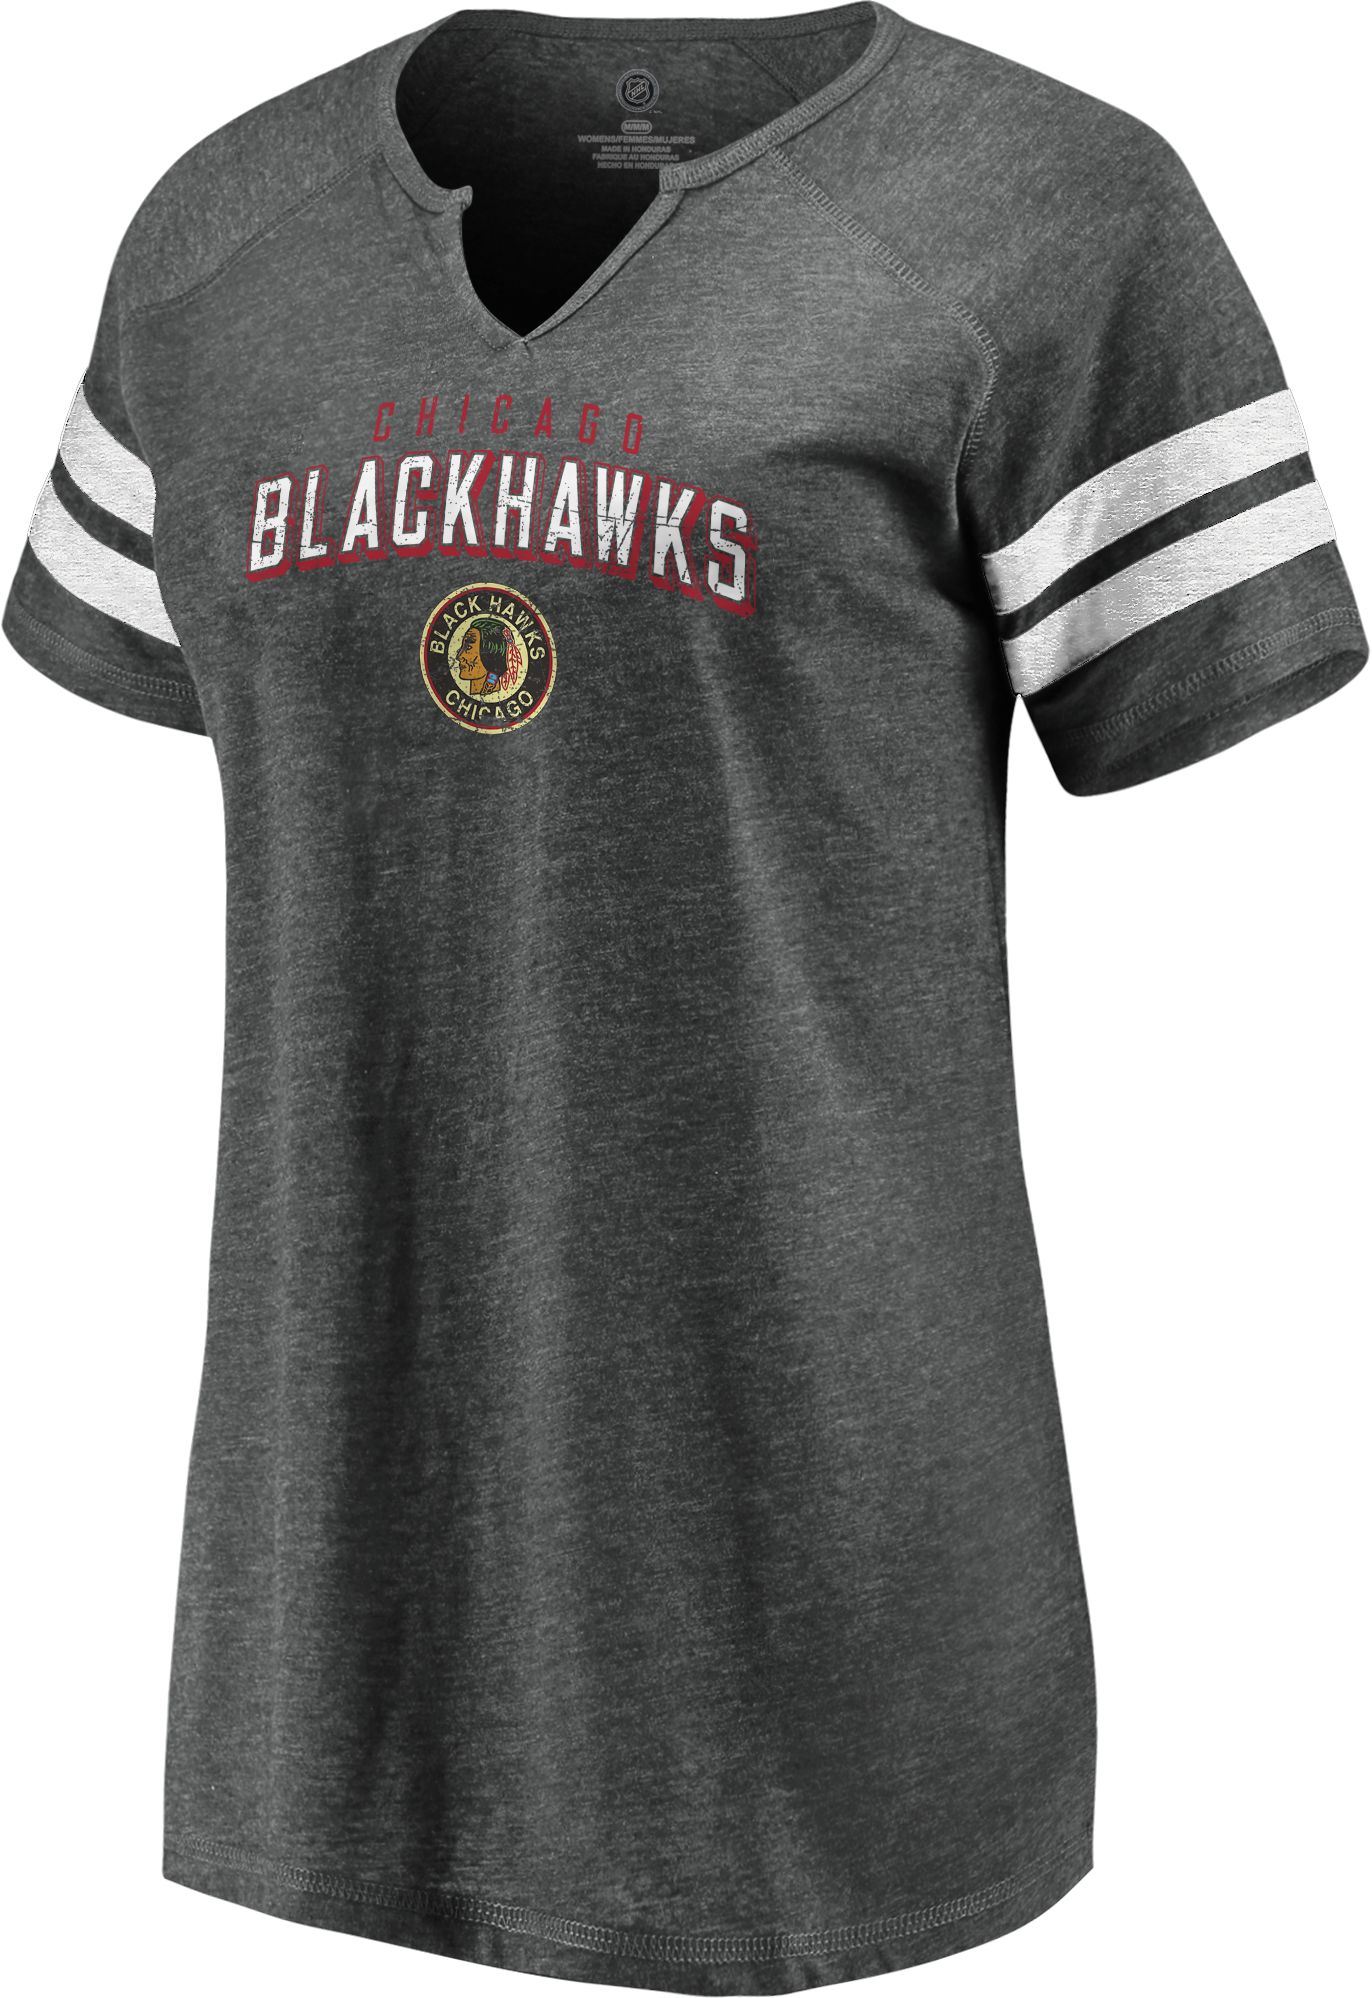 dicks blackhawks jersey